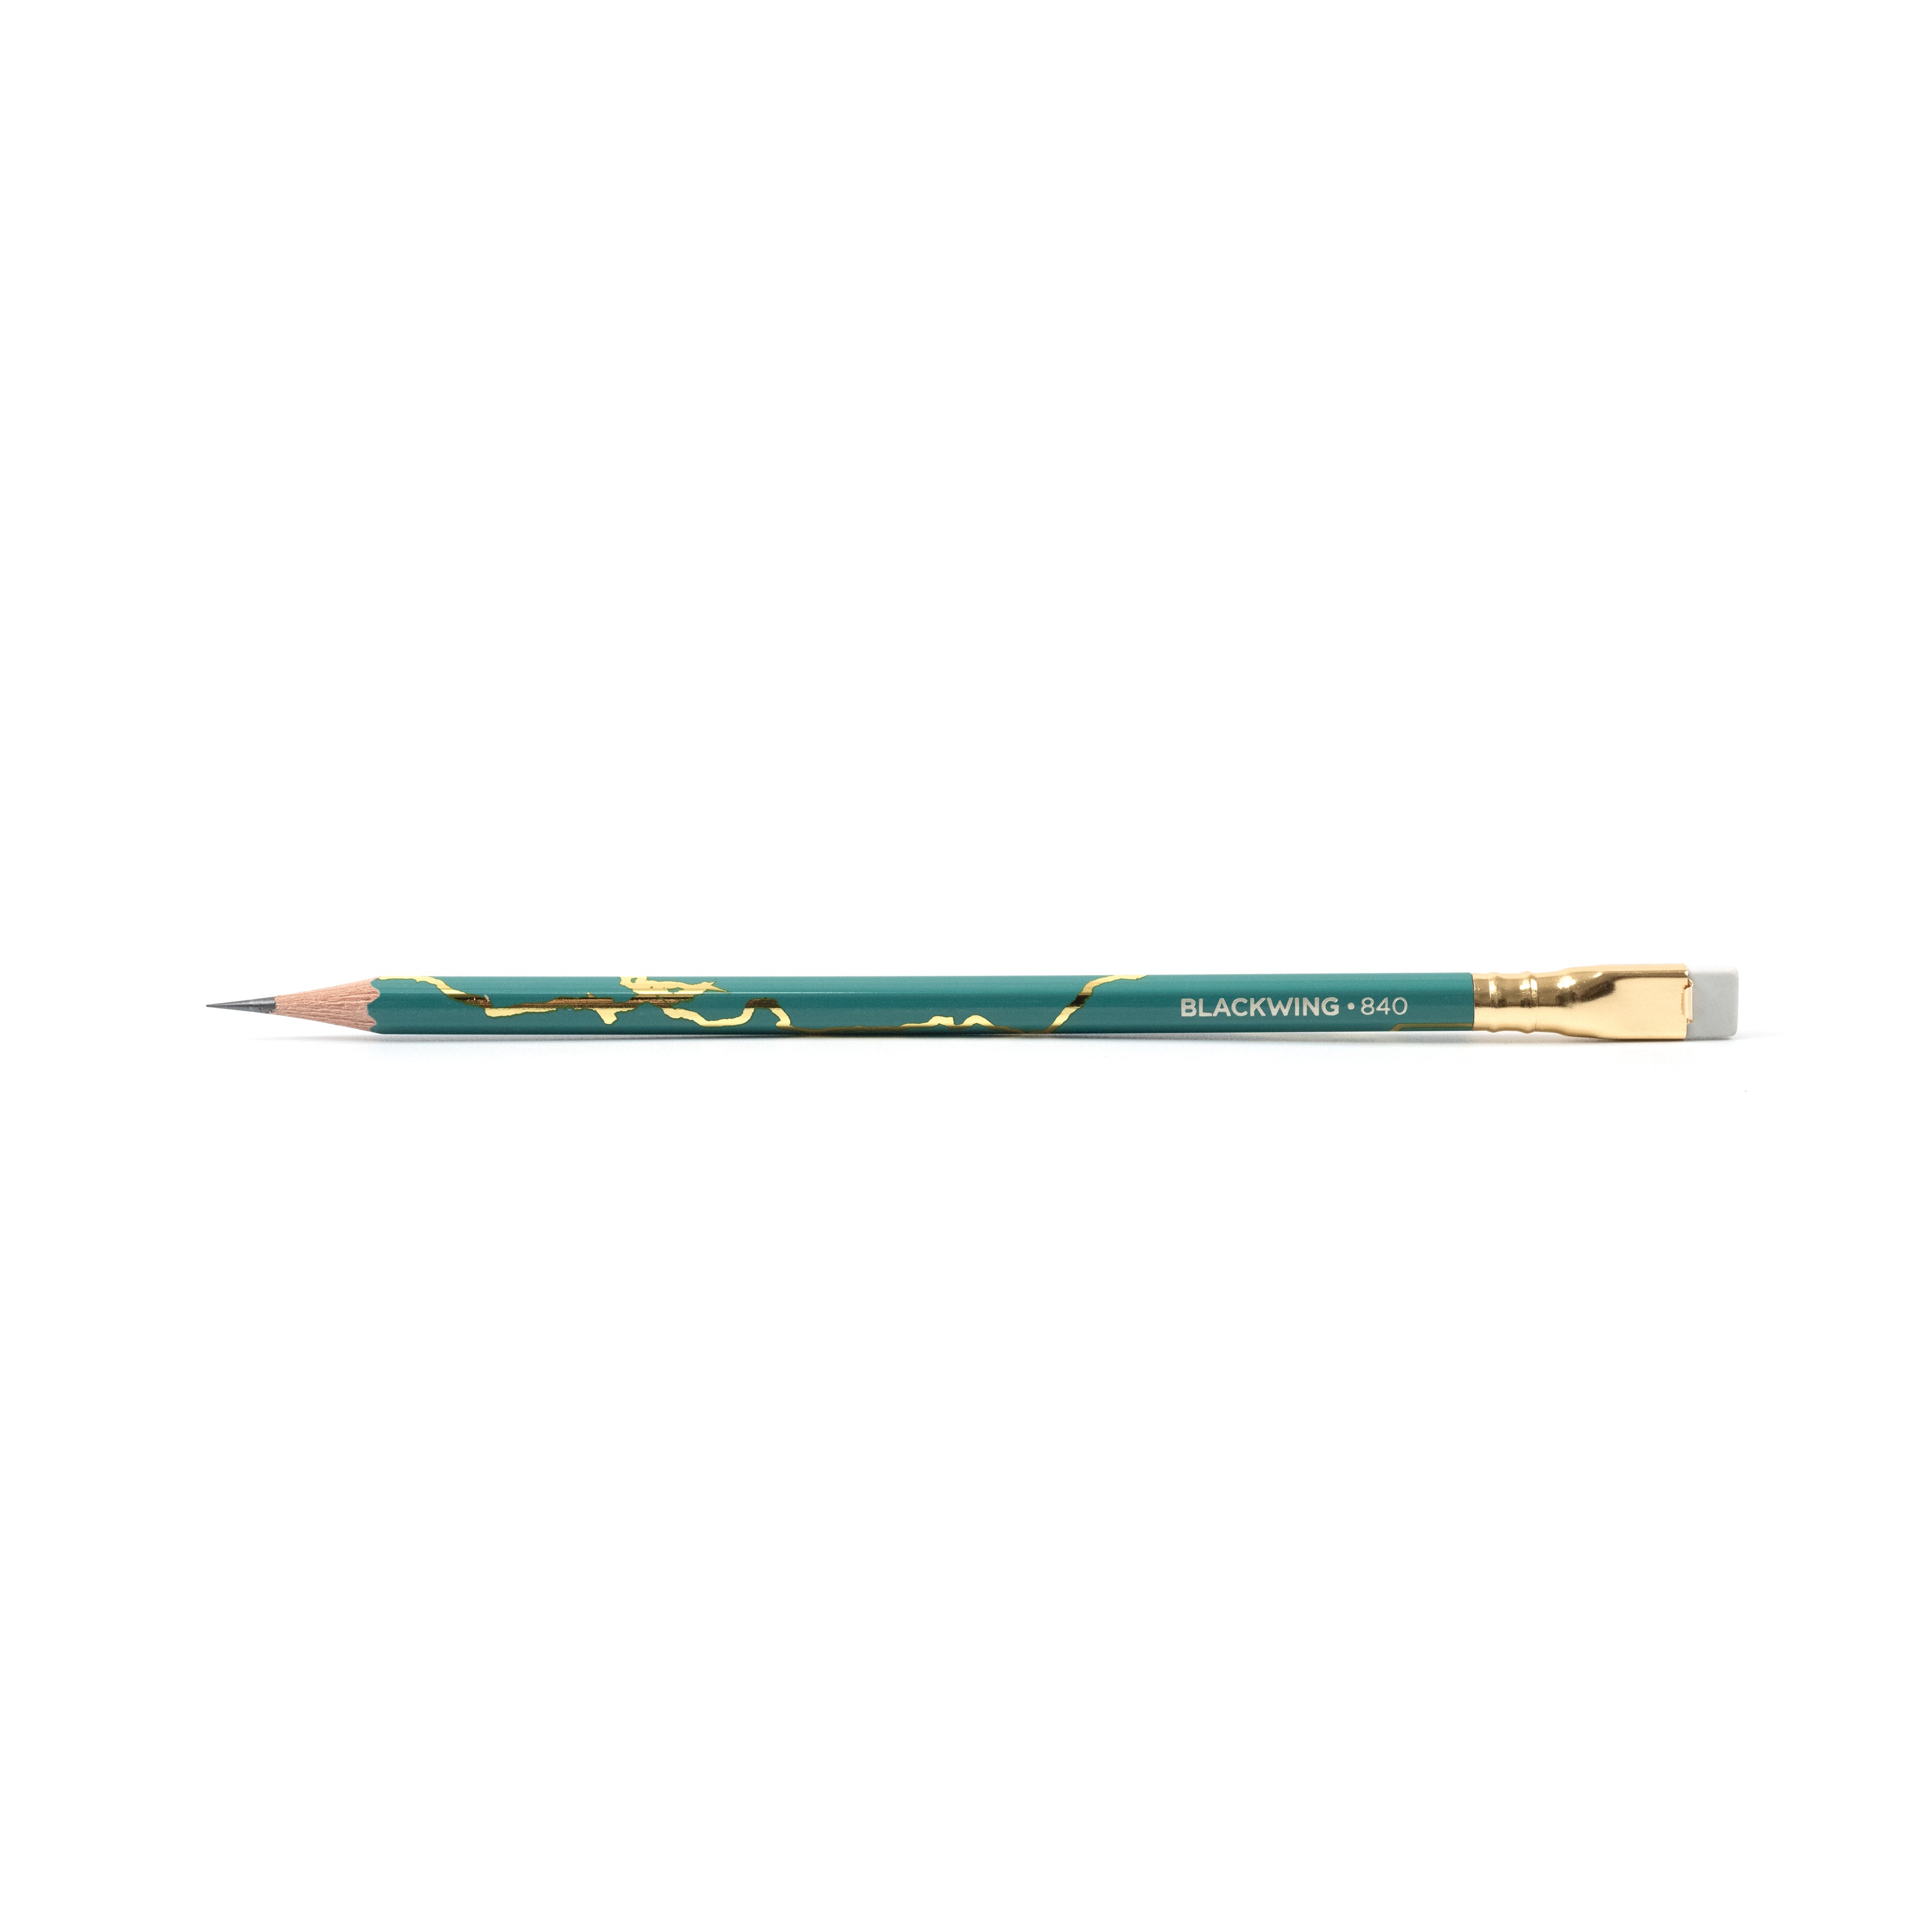 Blackwing Audition Pack - Set of 4 Pencils 